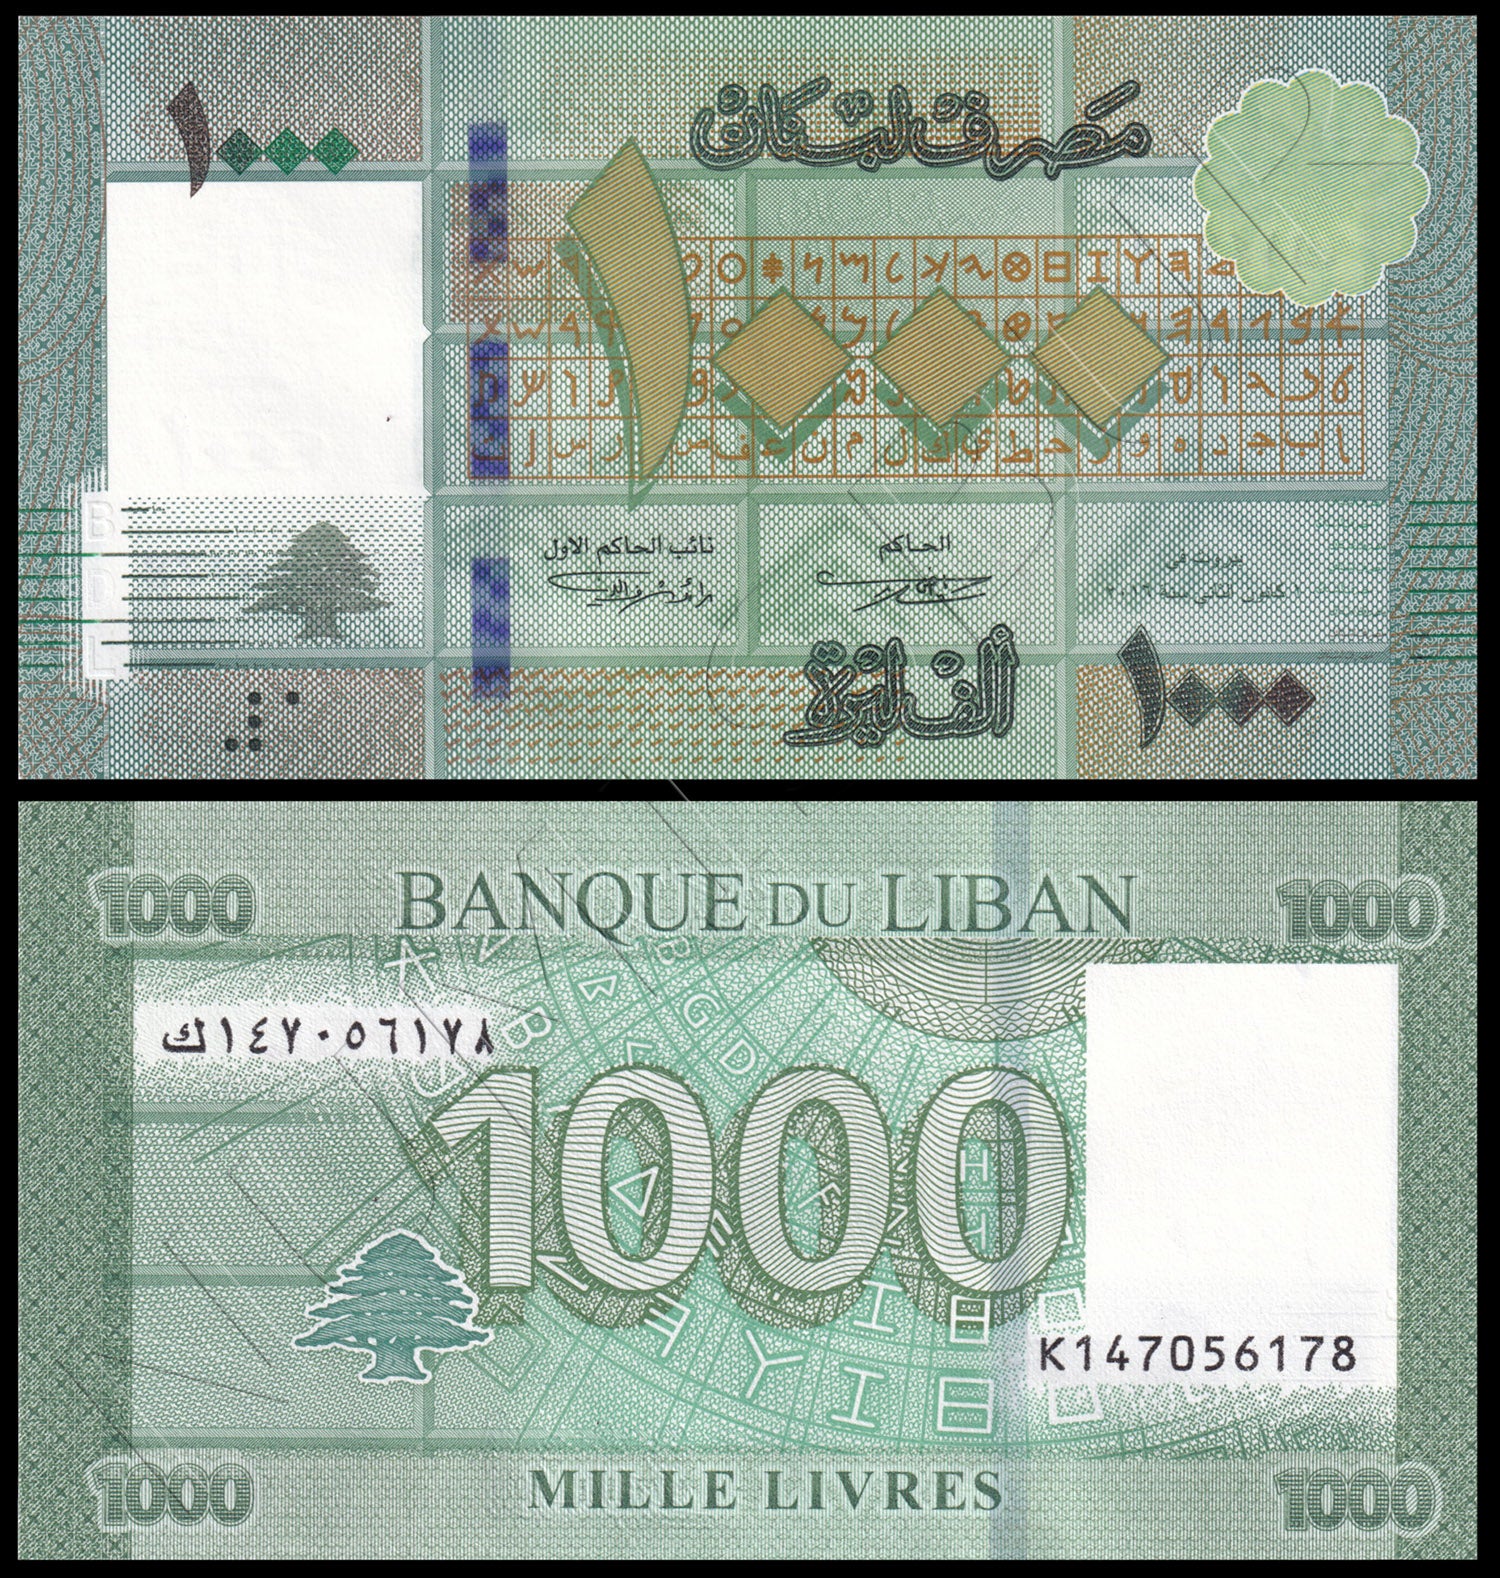 1000 livres LIBANO 2011 - Pick 90a